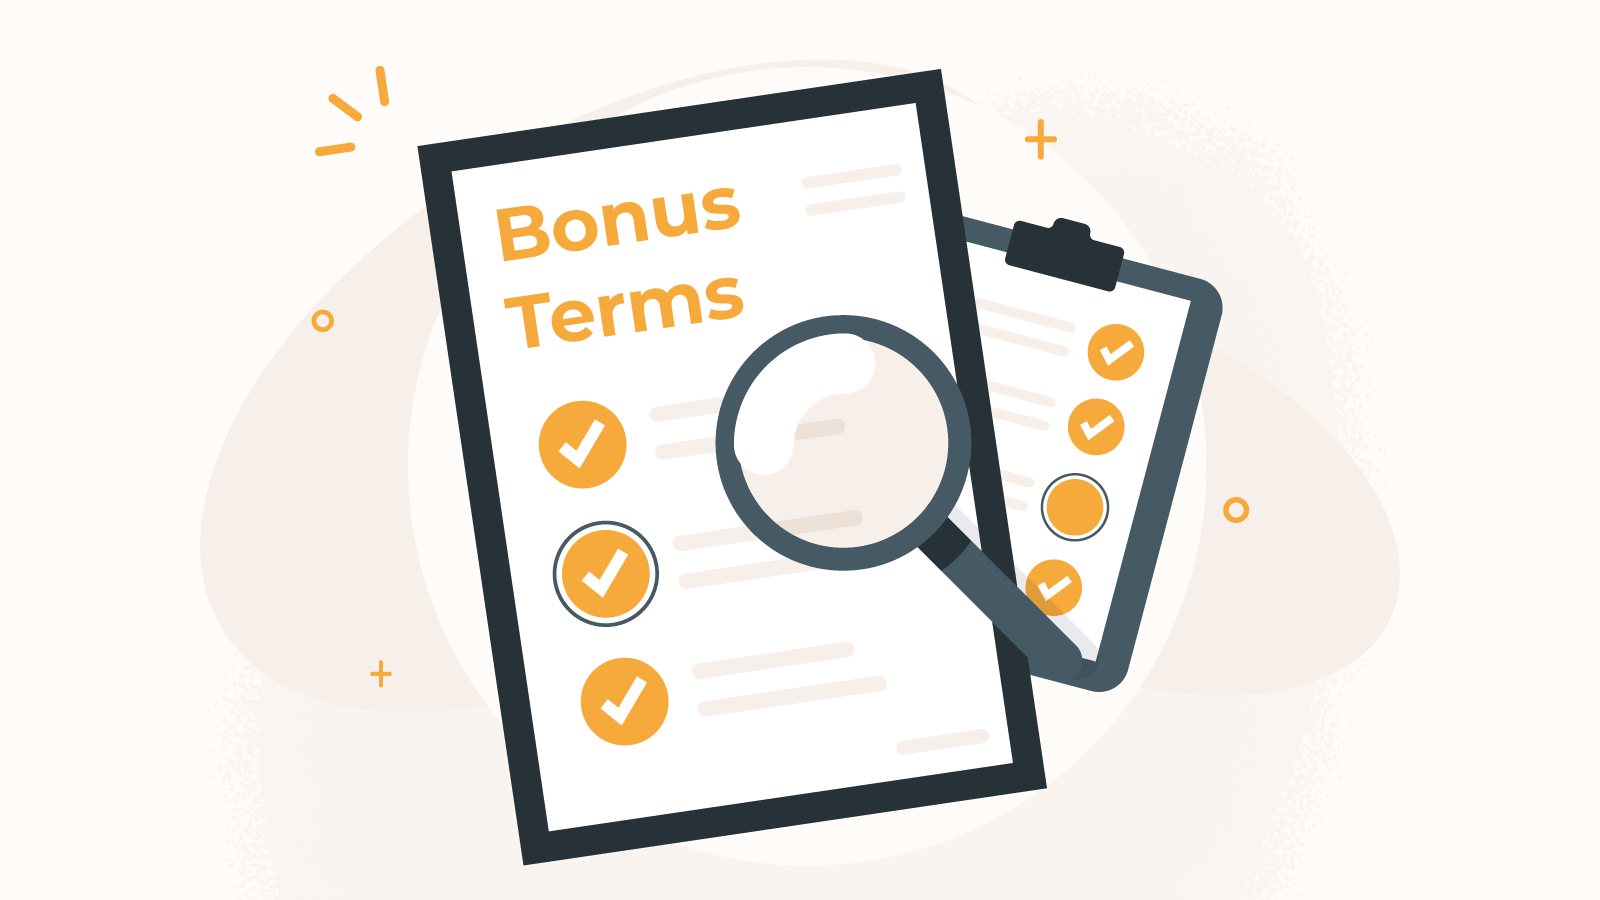 Bonus terms for 10 casino bonuses no deposit